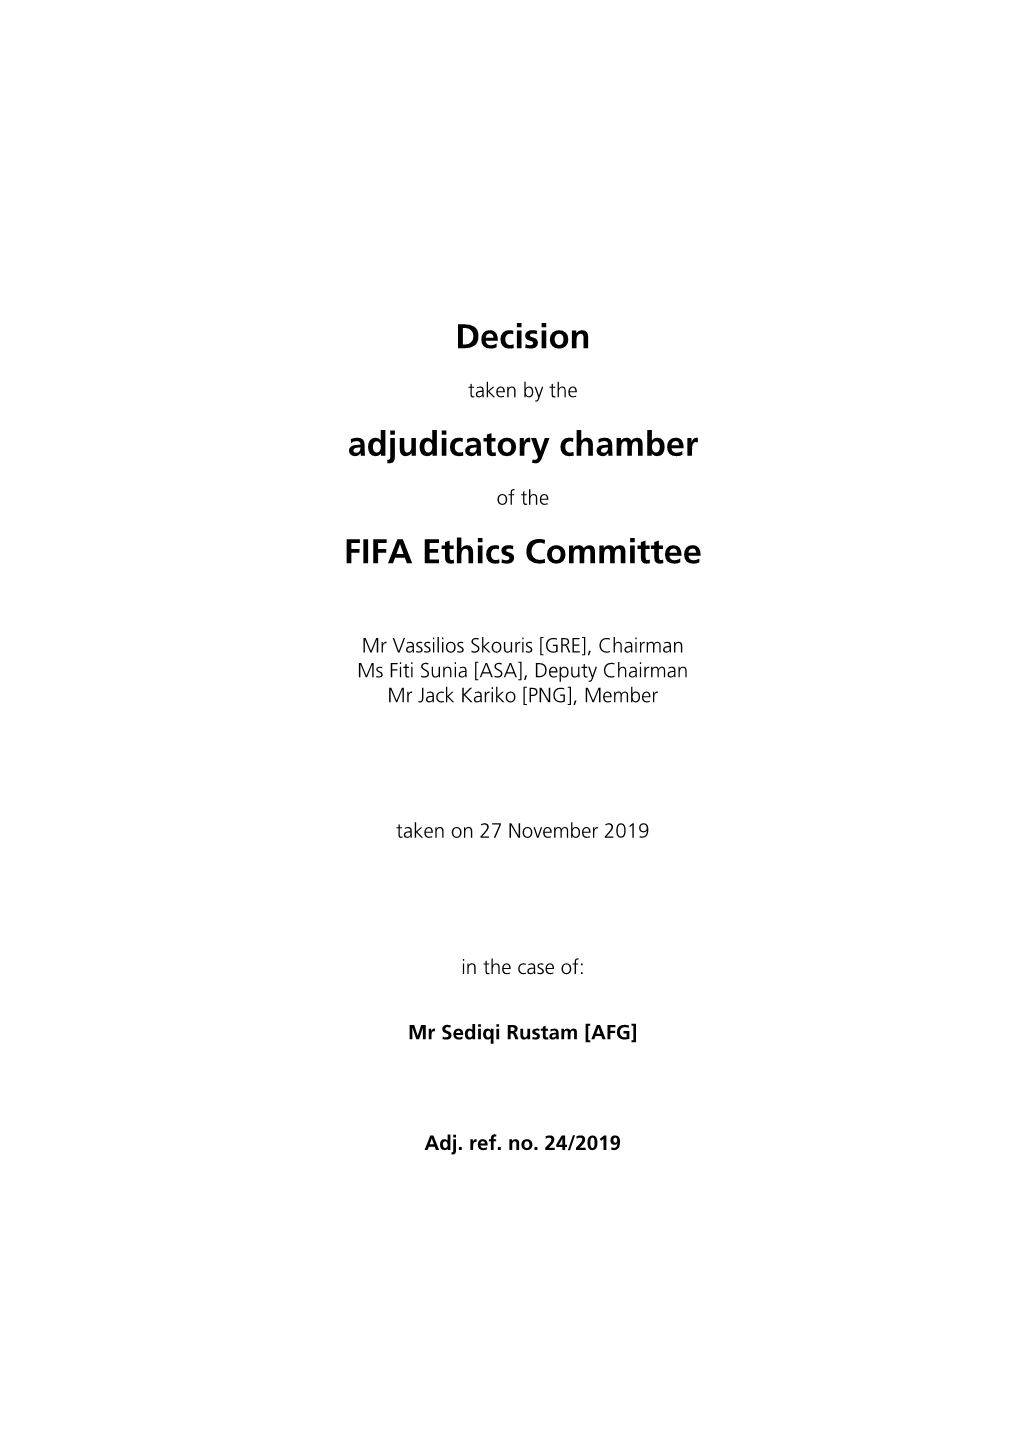 Decision Adjudicatory Chamber FIFA Ethics Committee